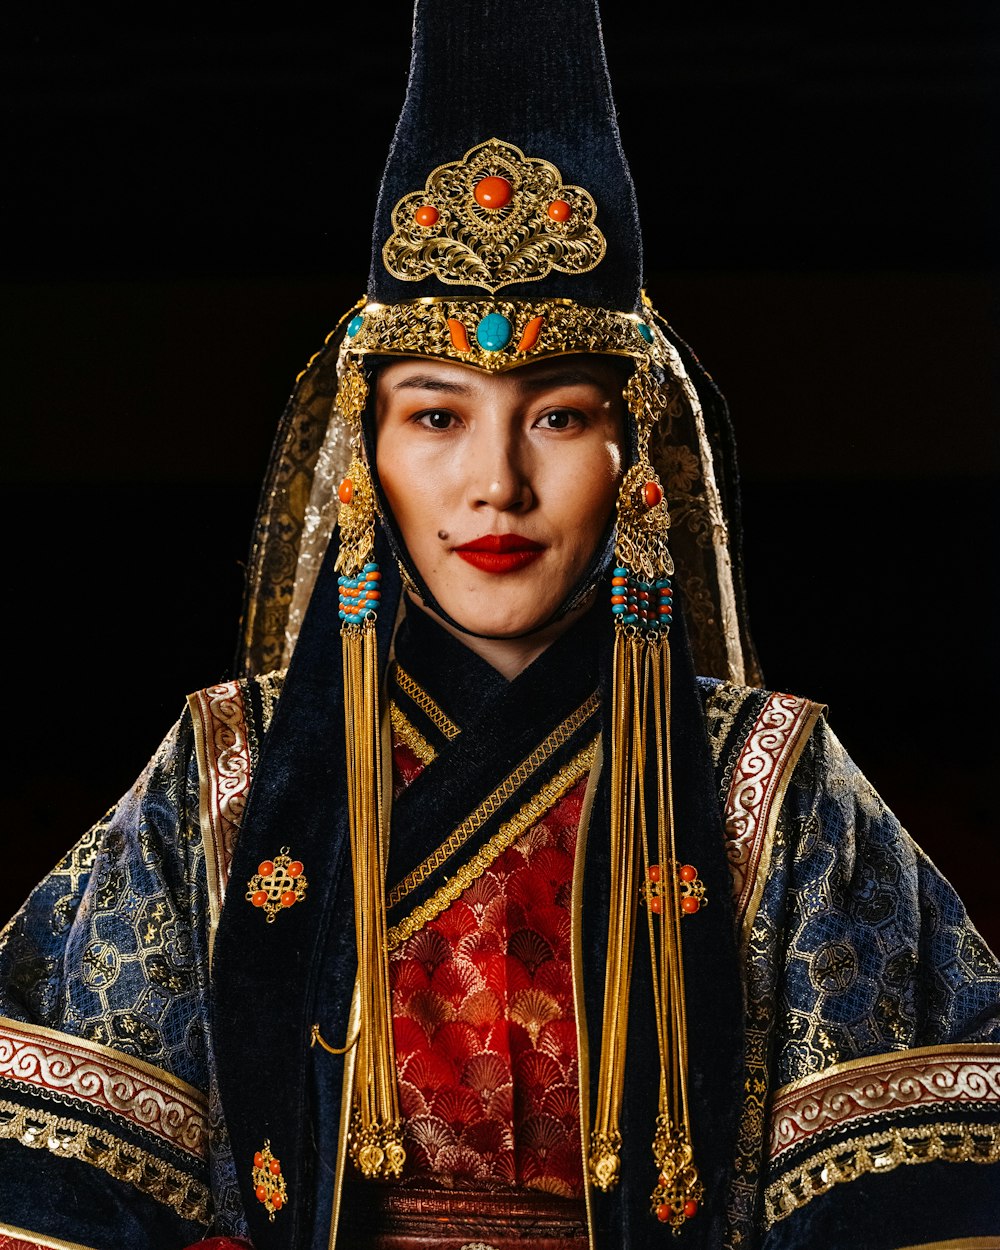 Una mujer vestida con un traje tradicional chino